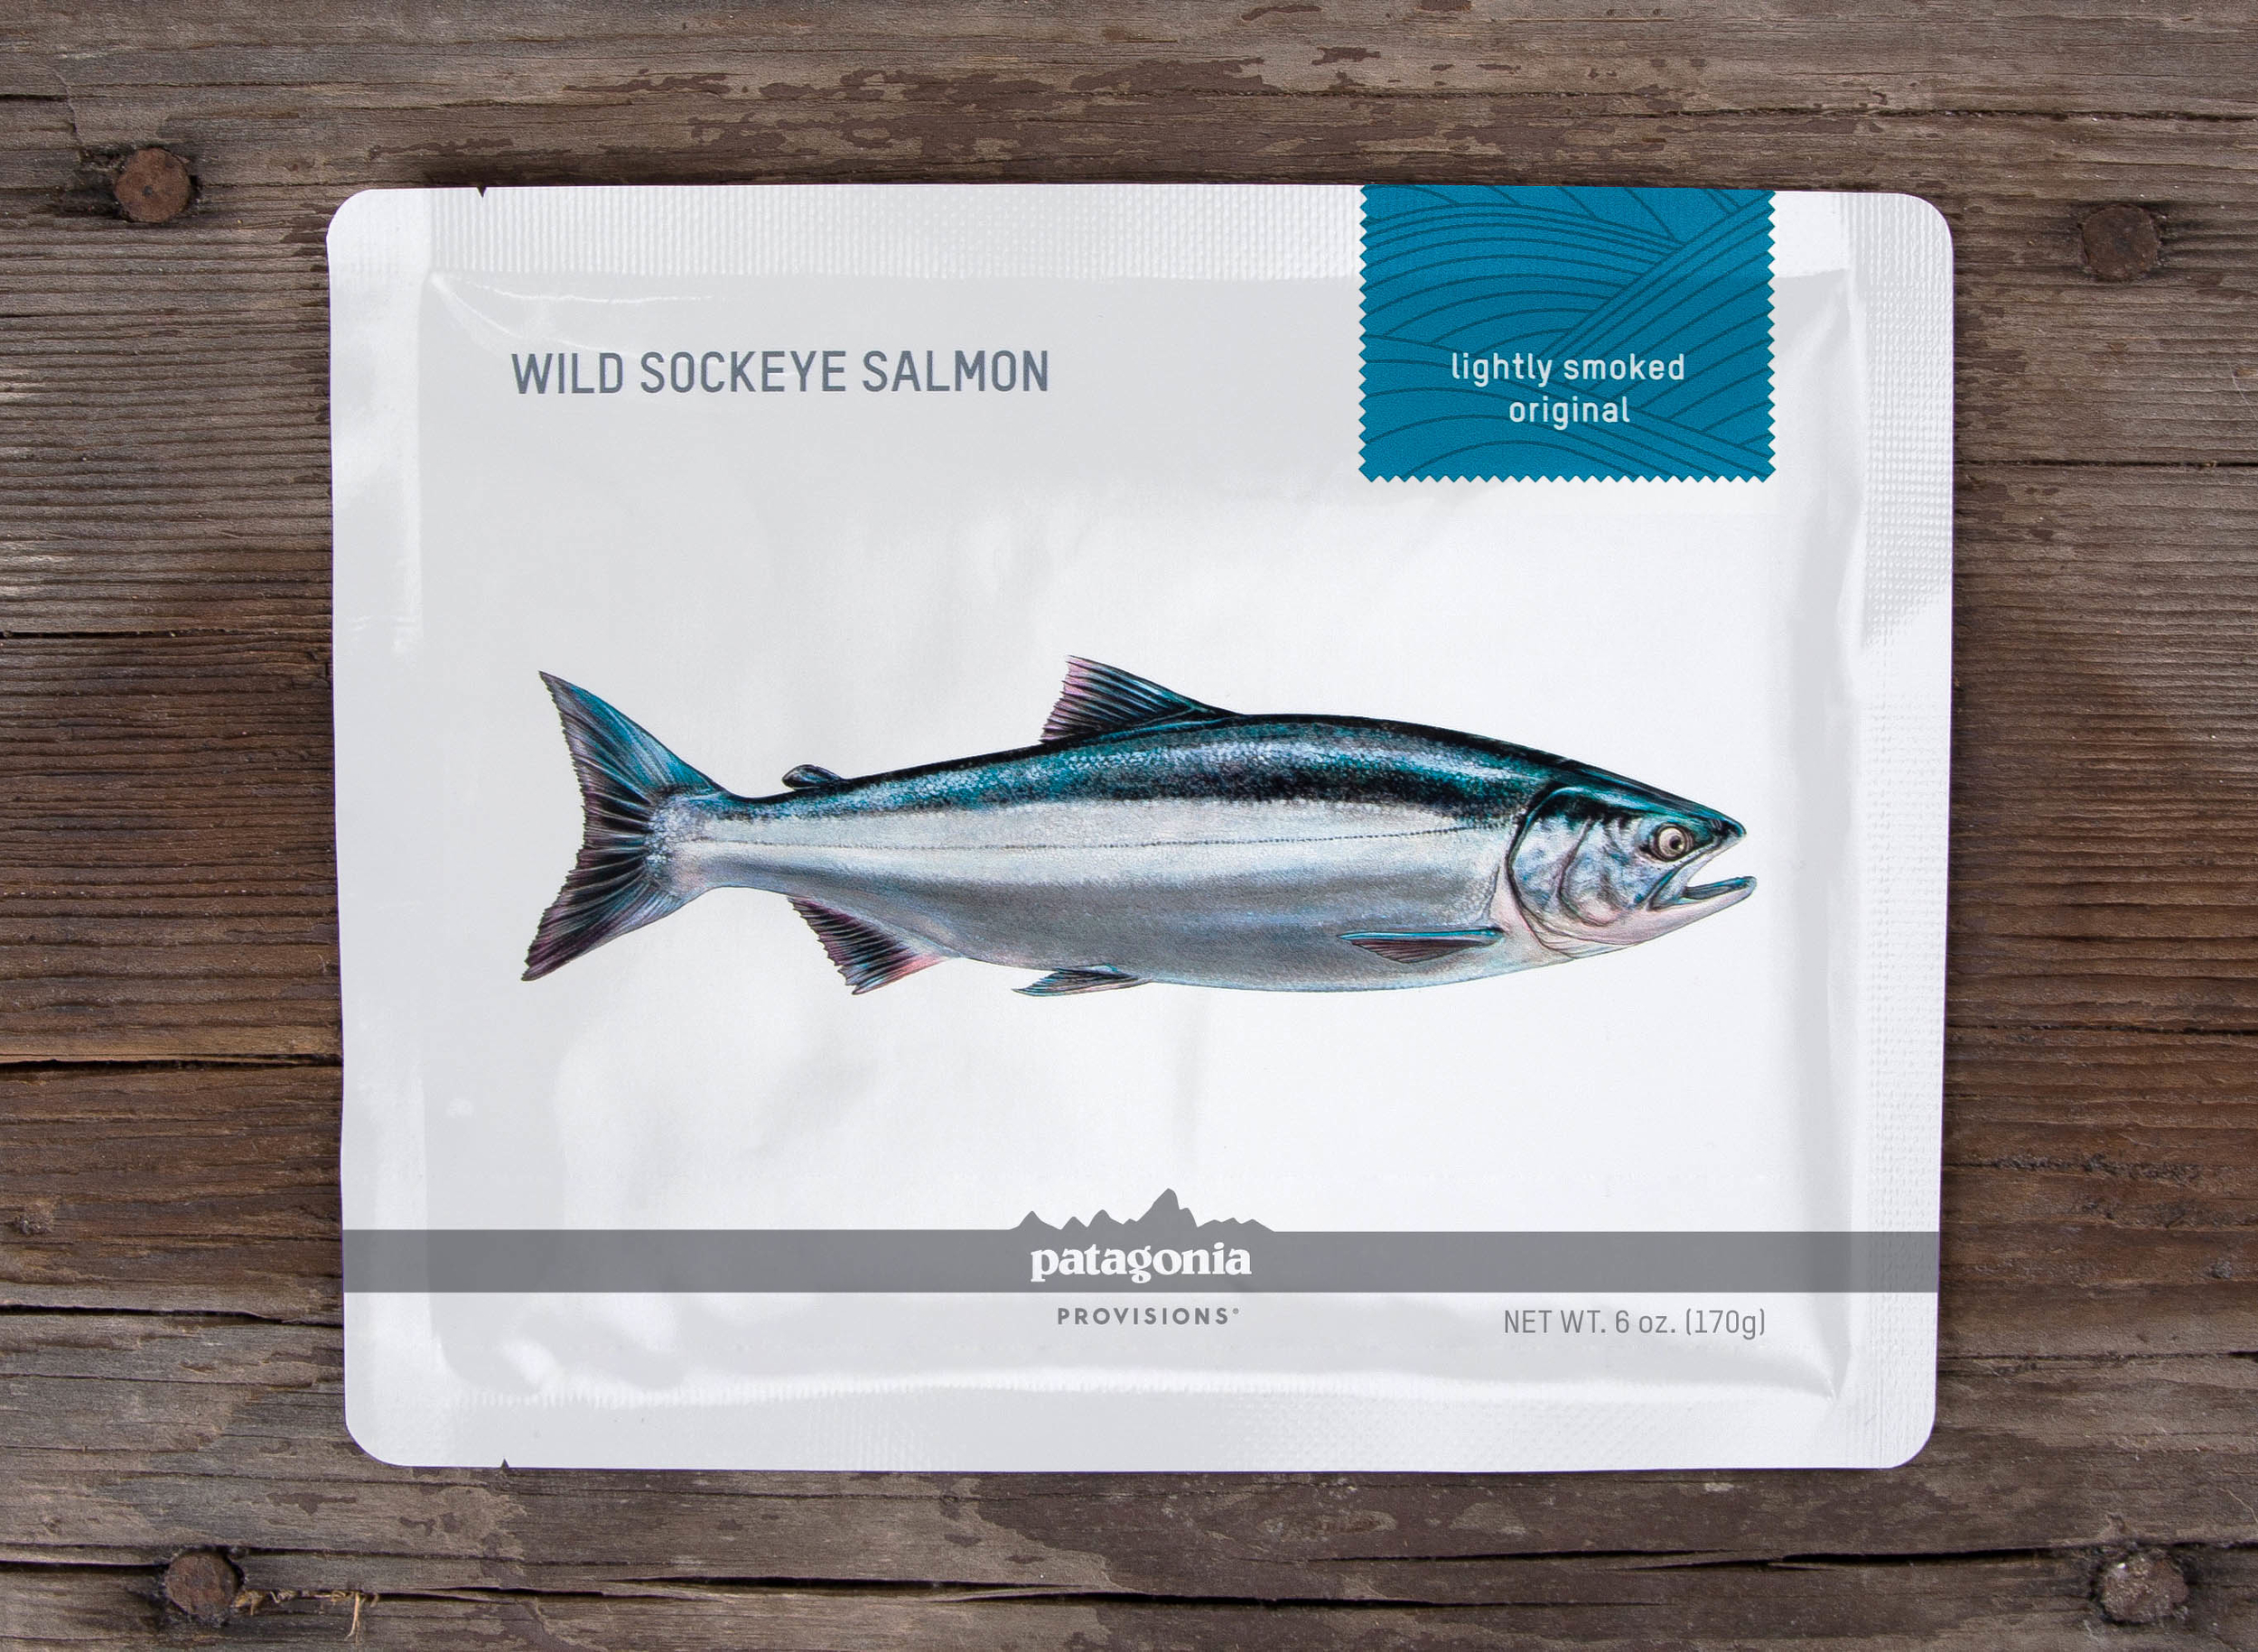 Patagonia Salmon  Dieline - Design, Branding & Packaging Inspiration